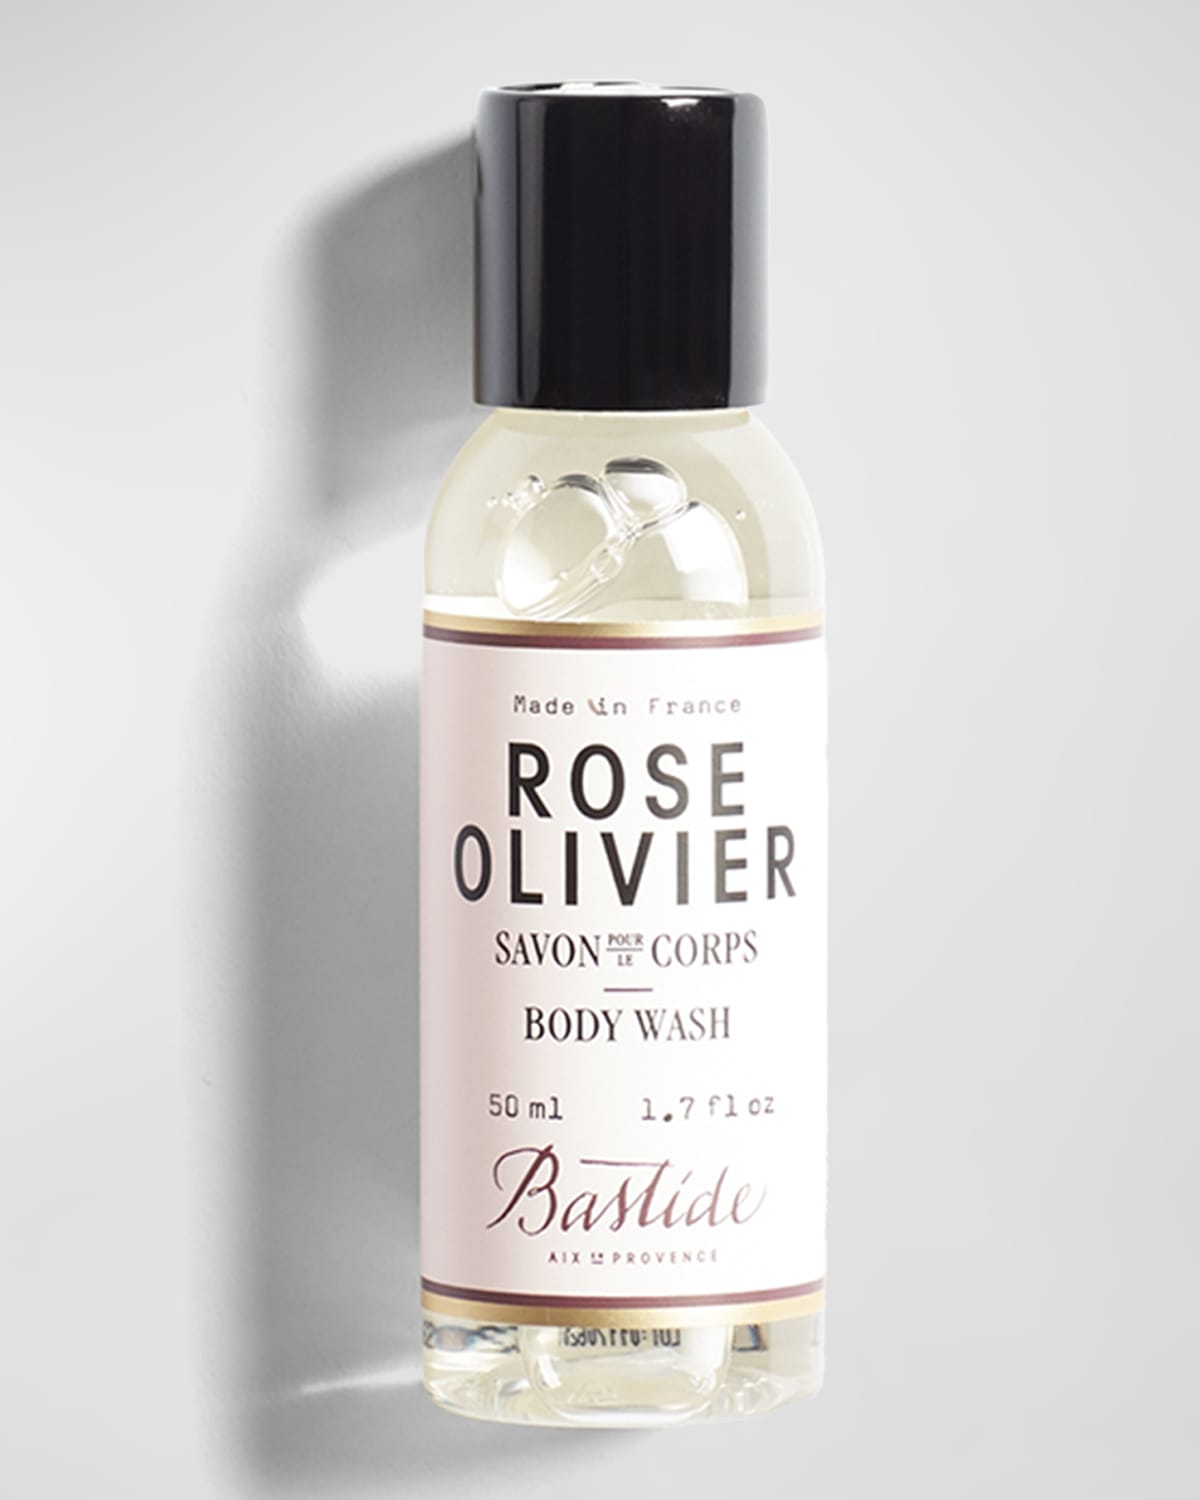 Bastide 1.7 oz. Rose Olivier Body Wash